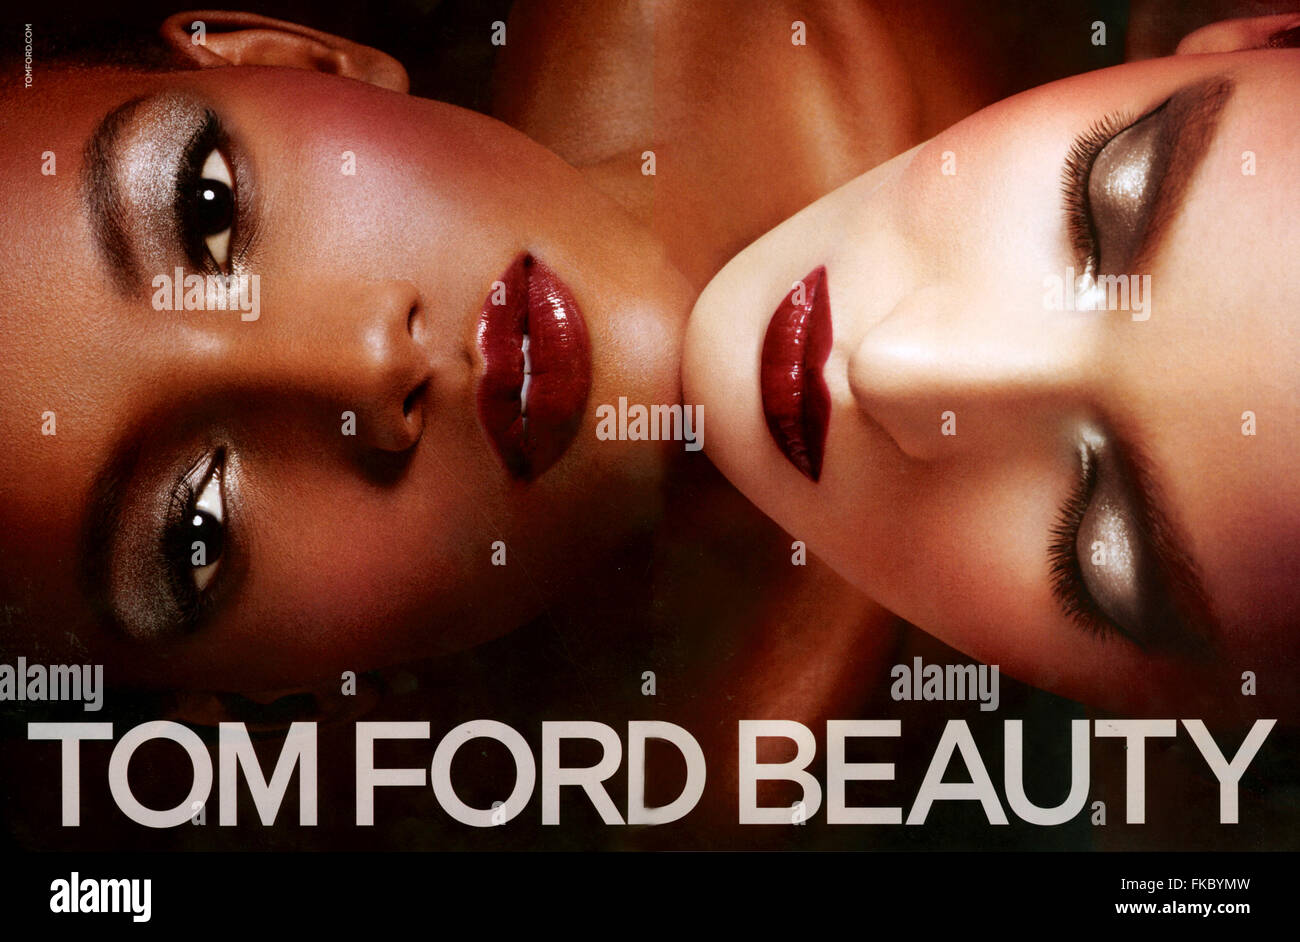 2010s UK Tom Ford Magazine Advert Stock Photo